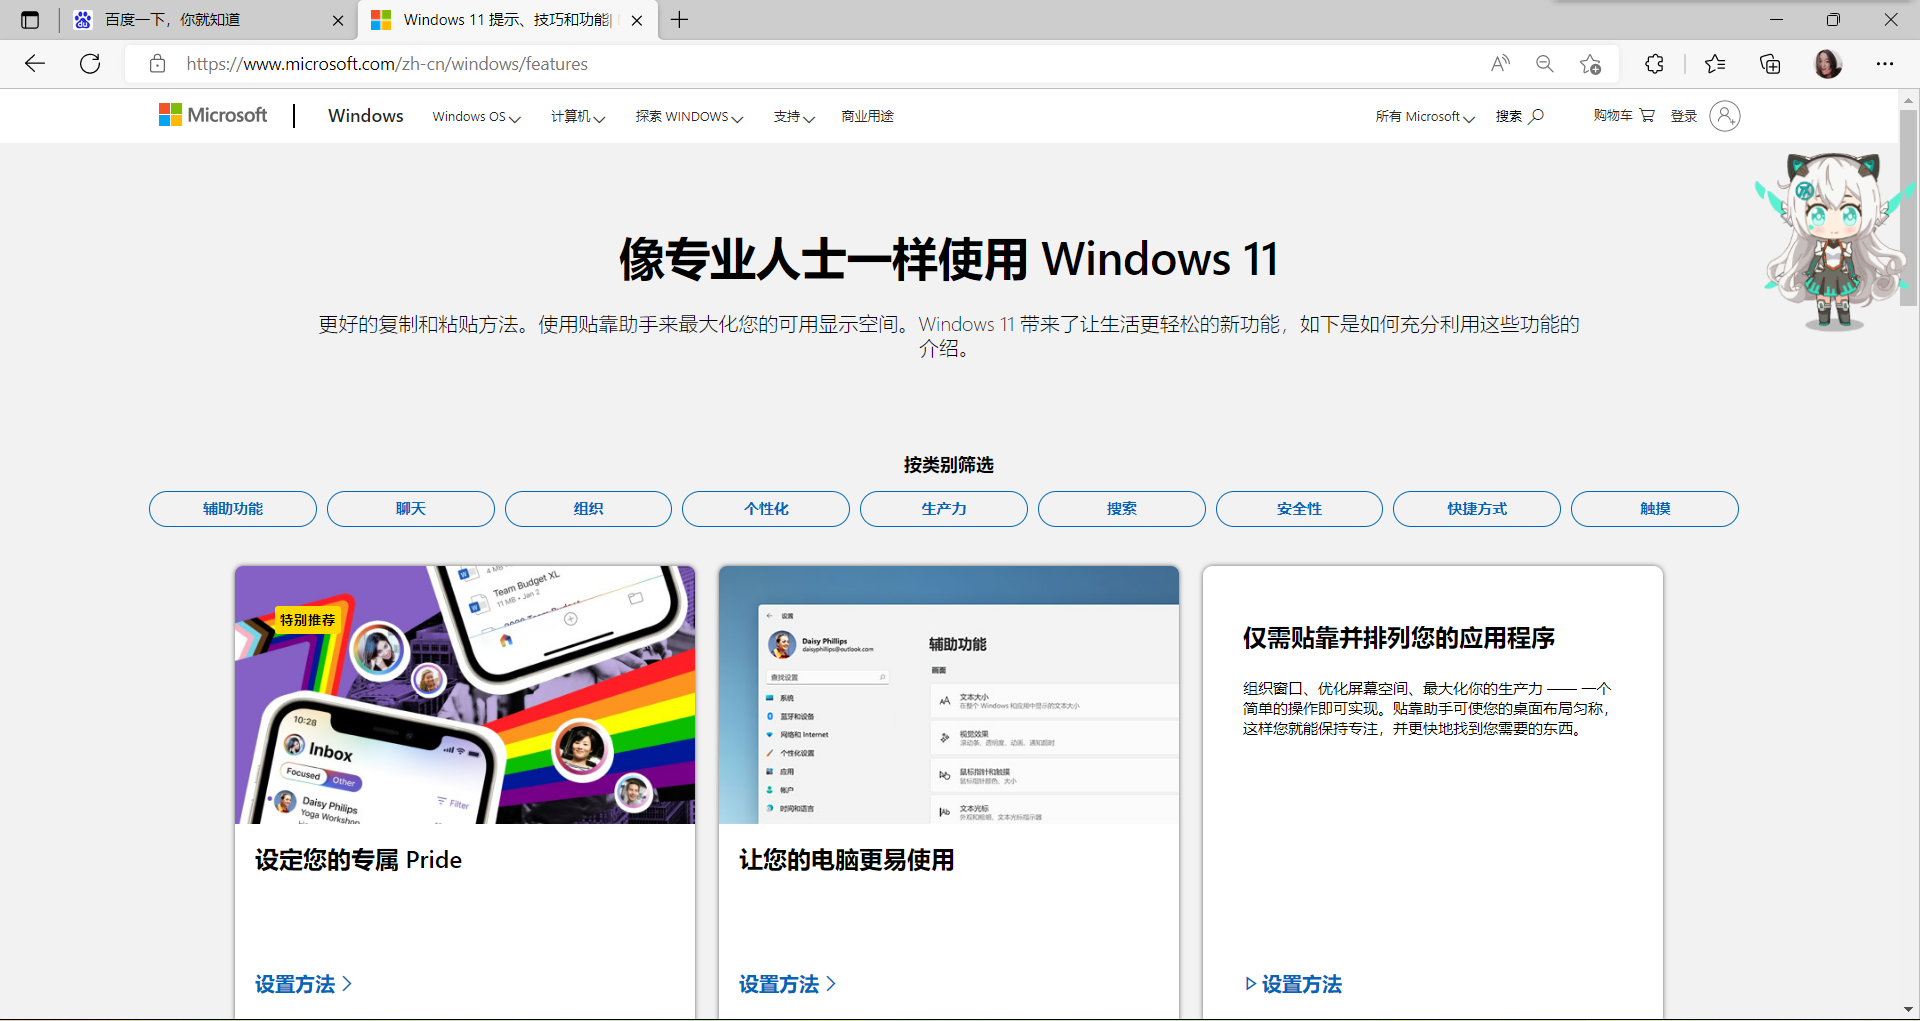 Windows11的功能介绍页